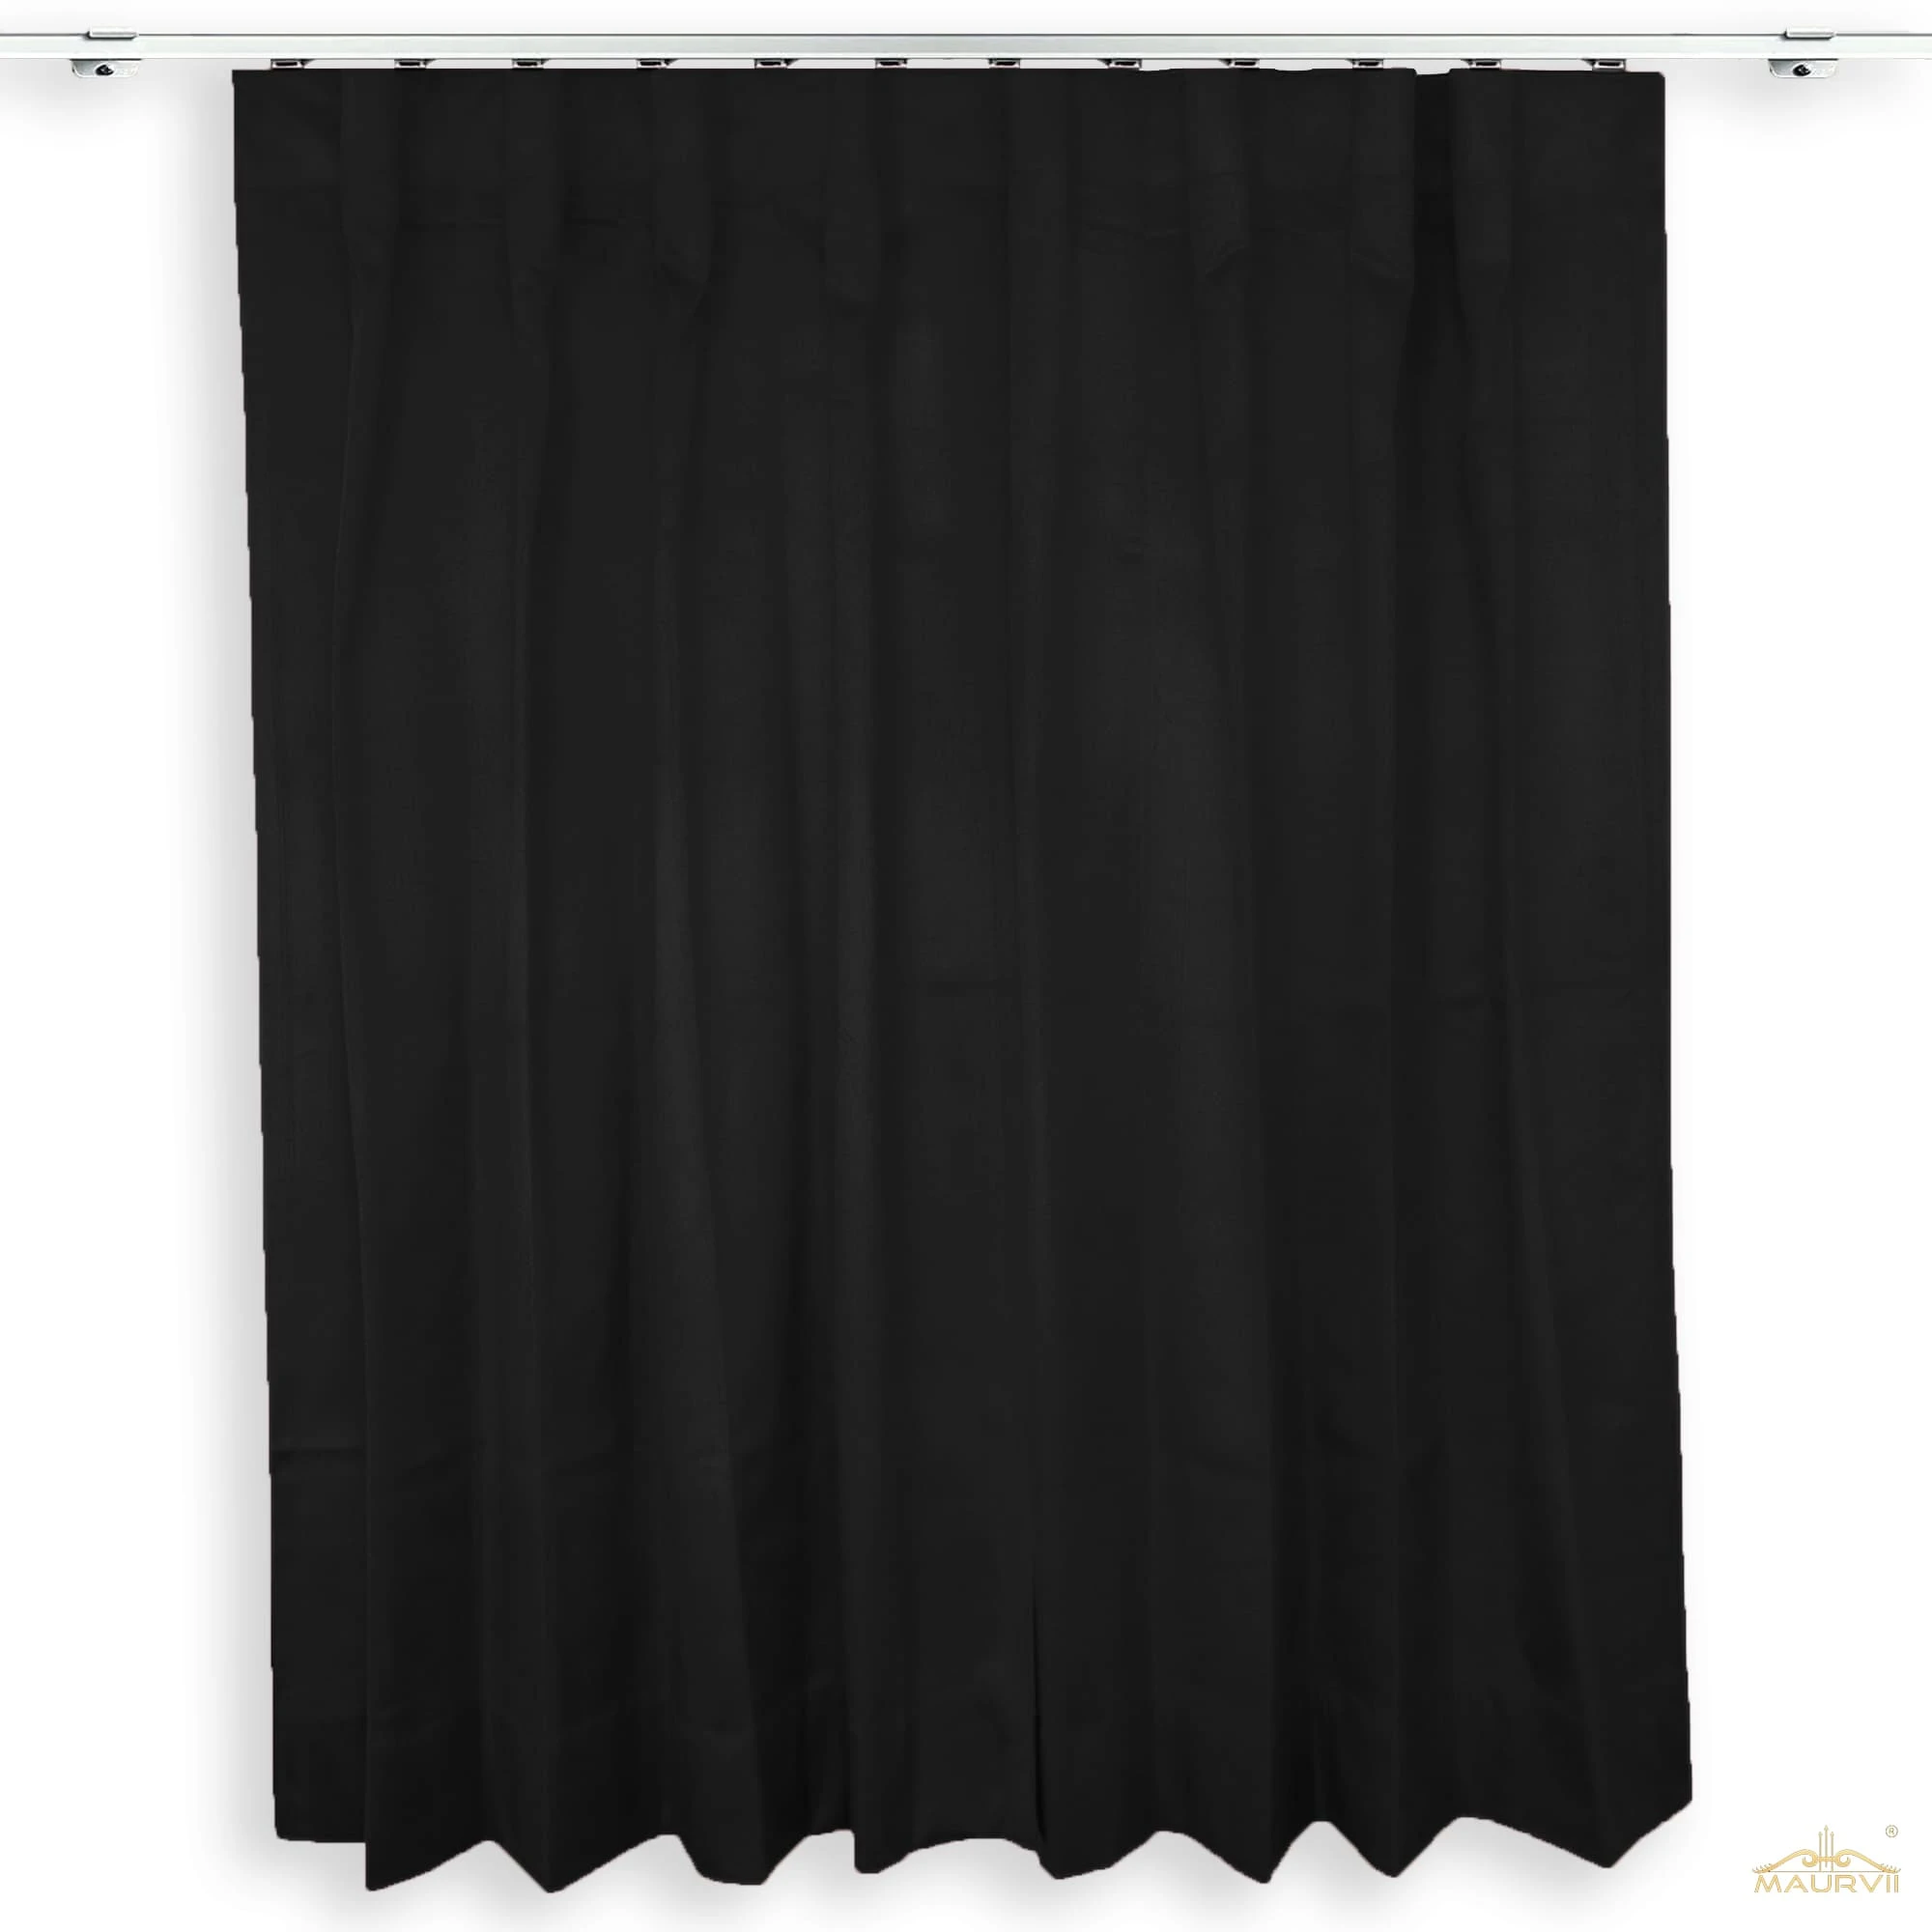 Triple pleated velvet curtains in black color